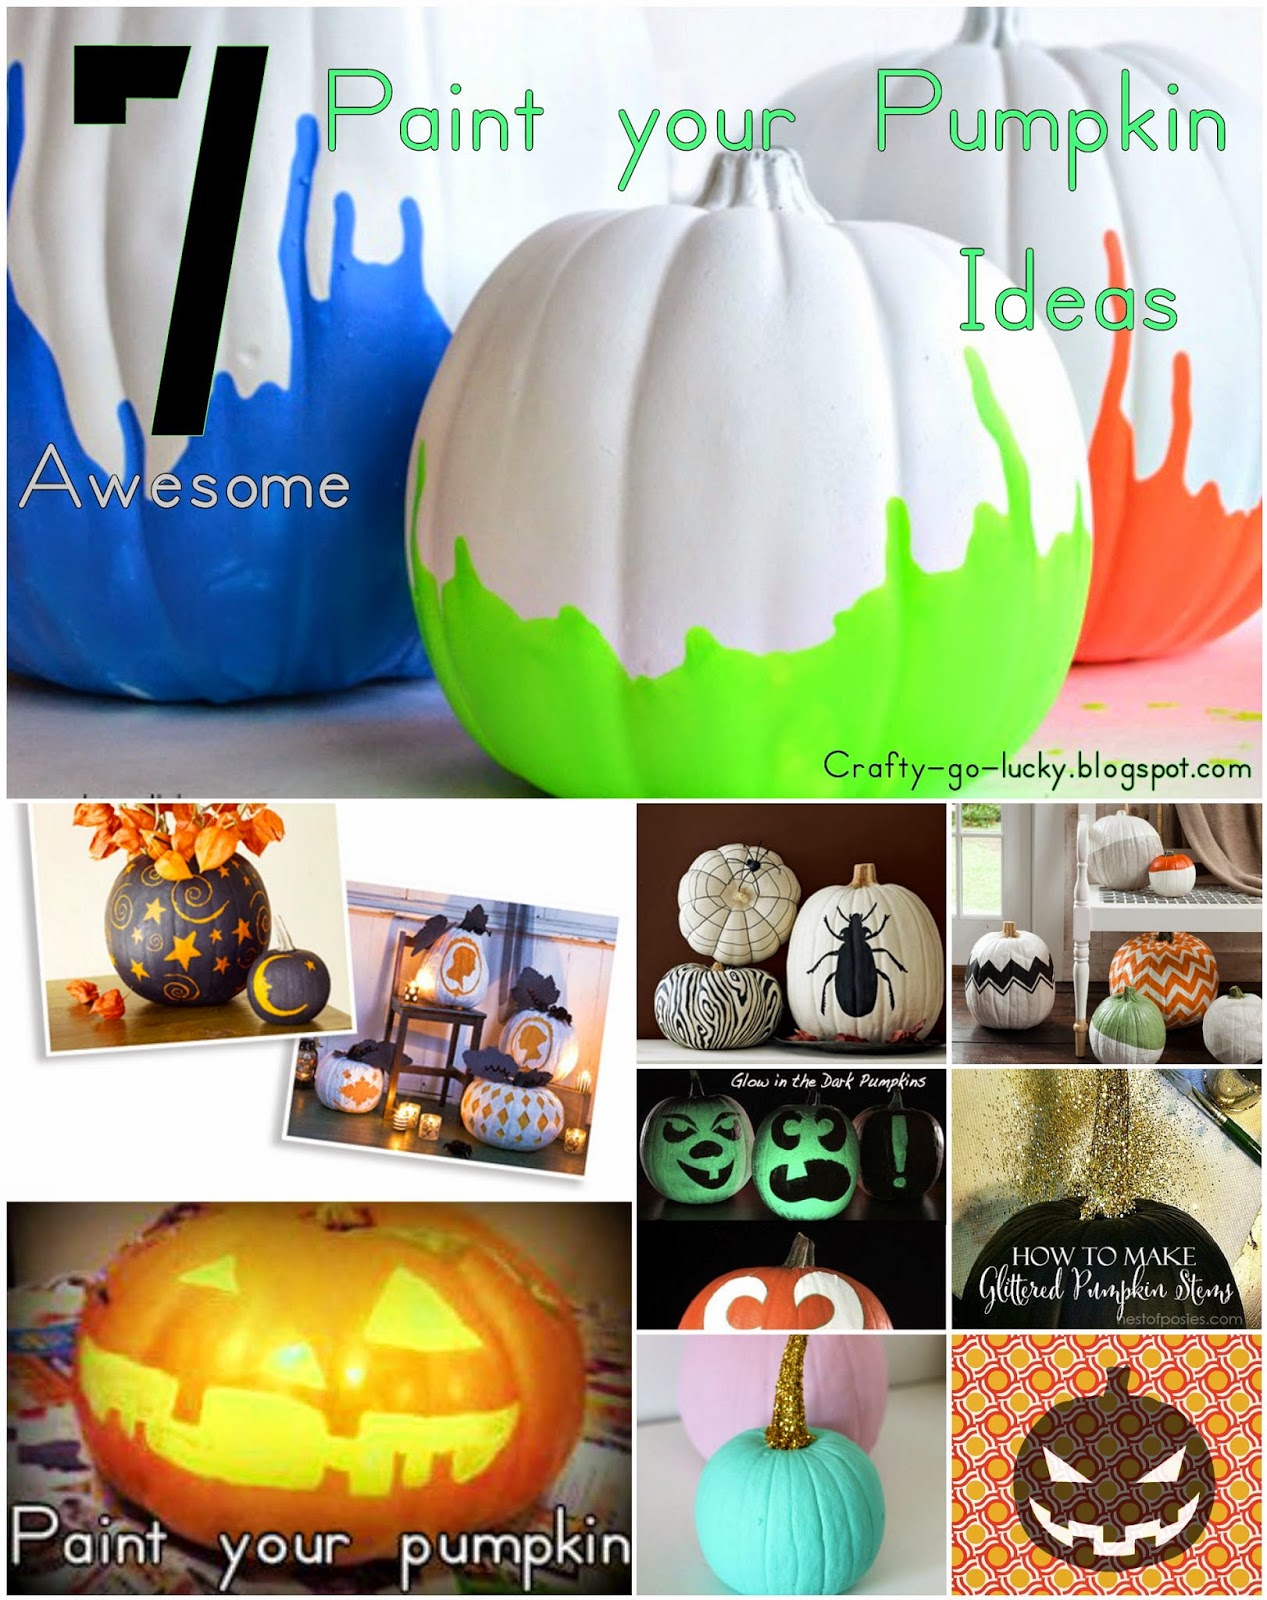 Crafty-Go-Lucky: 7 Awesome 'Paint Your Pumpkin' Ideas...